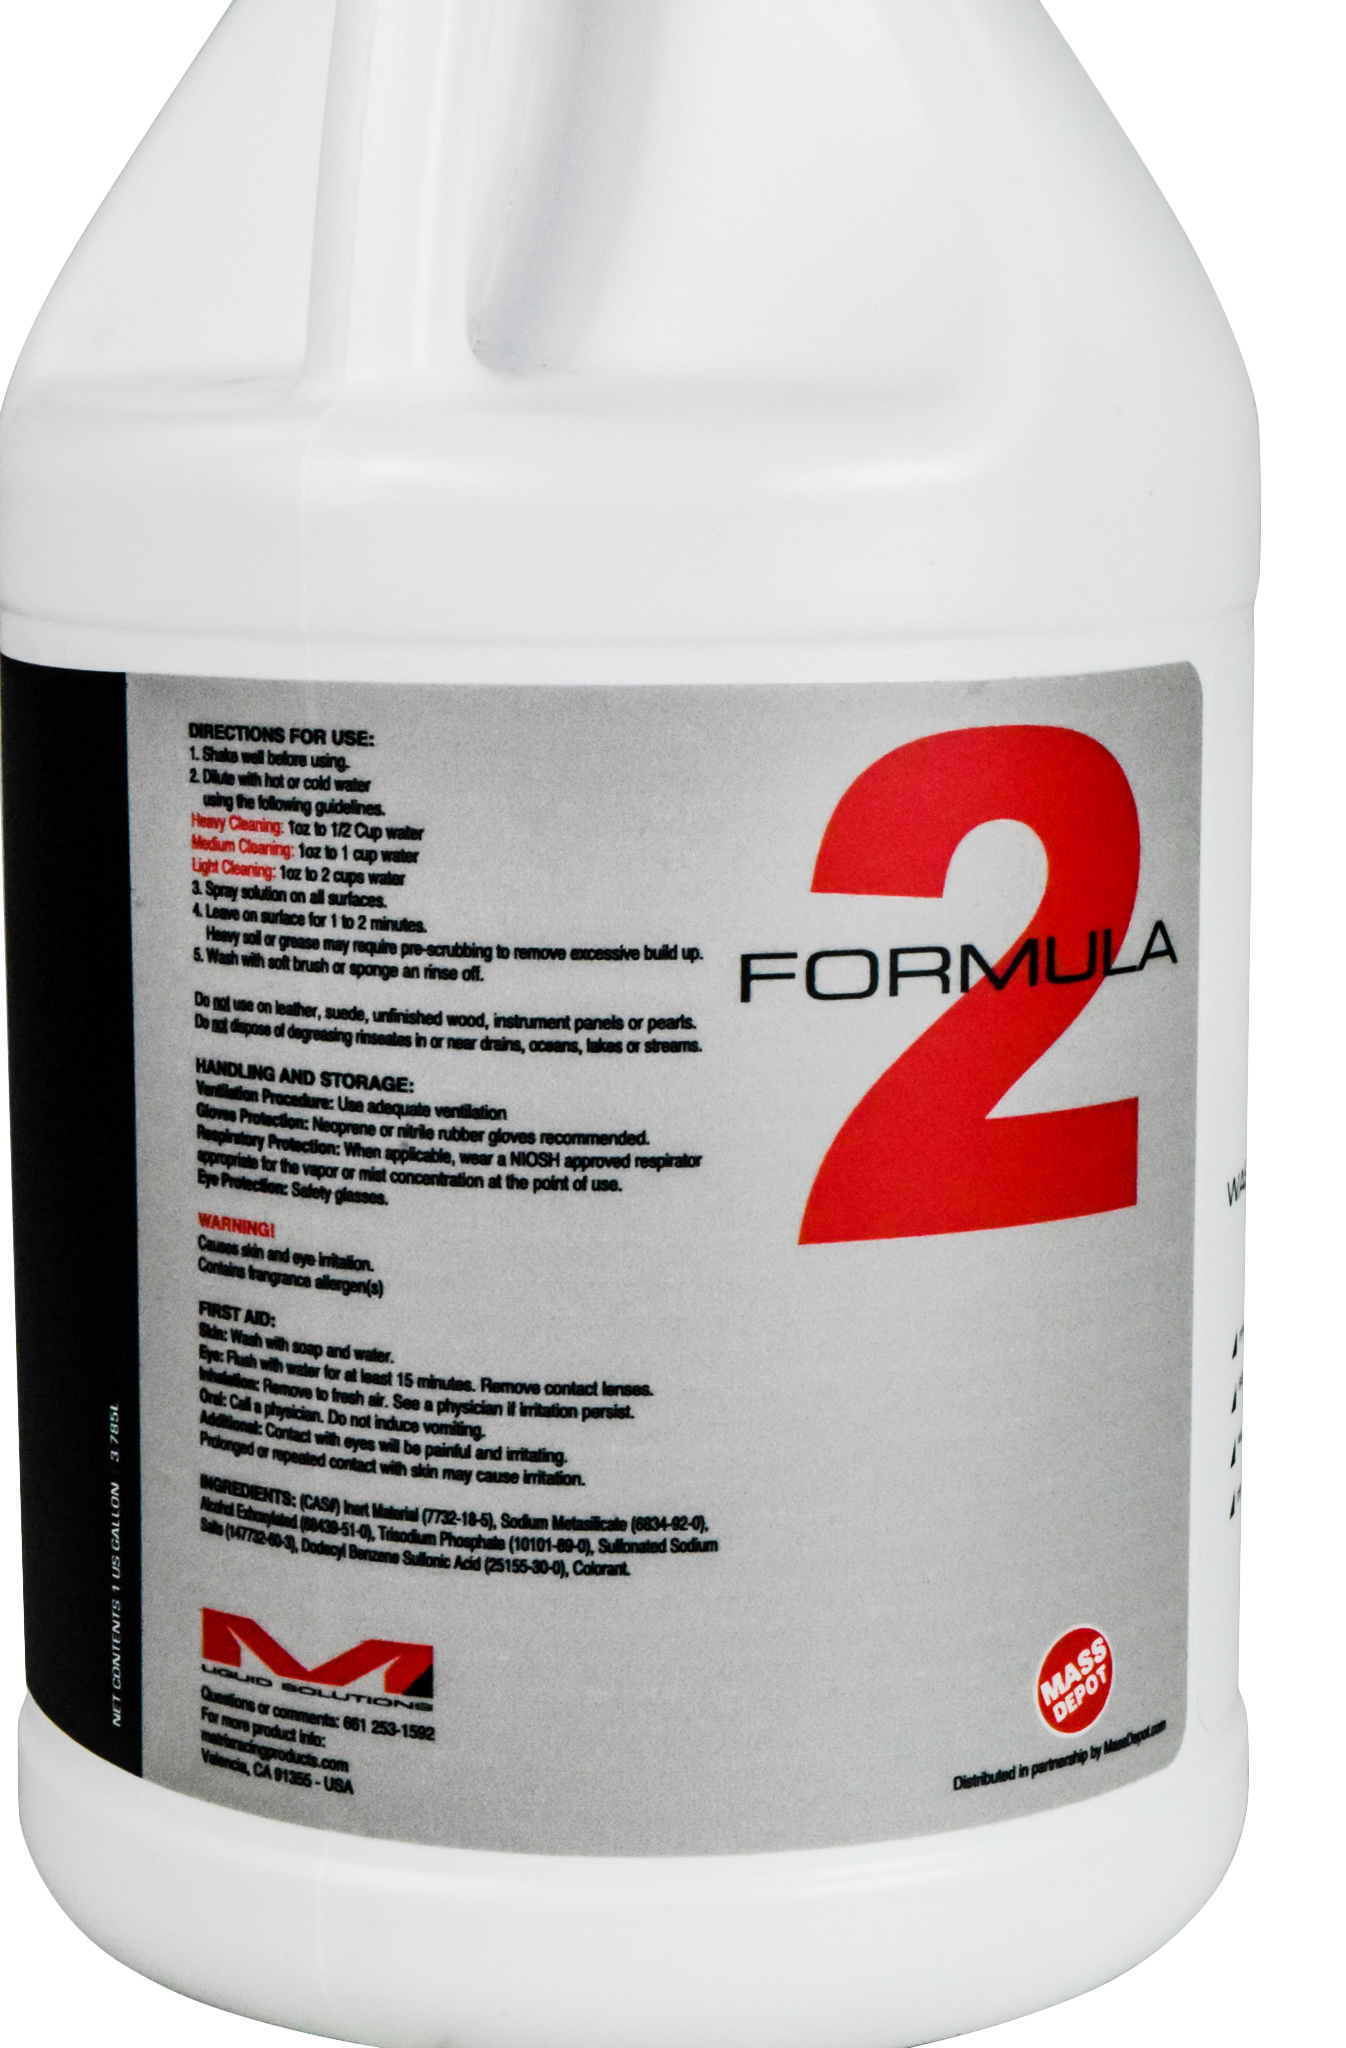 Matrix Liquid Solutions Formula 2 Biodegradable Wash Degreaser Gallon 2 Pack - image 4 of 5